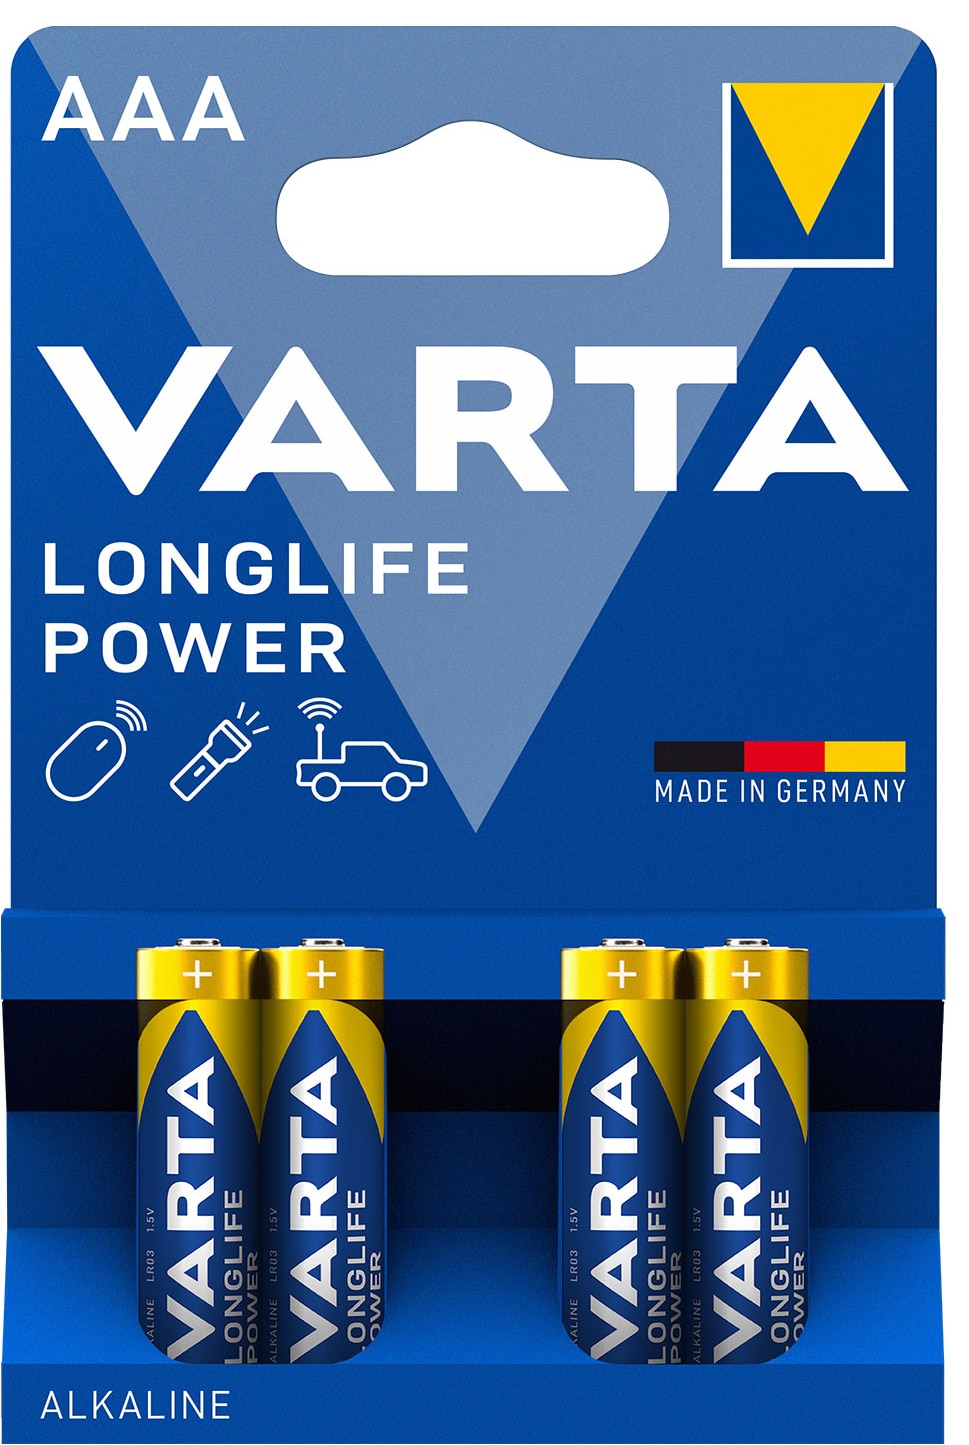 Varta Longlife Power AAA-batteri (4 st)